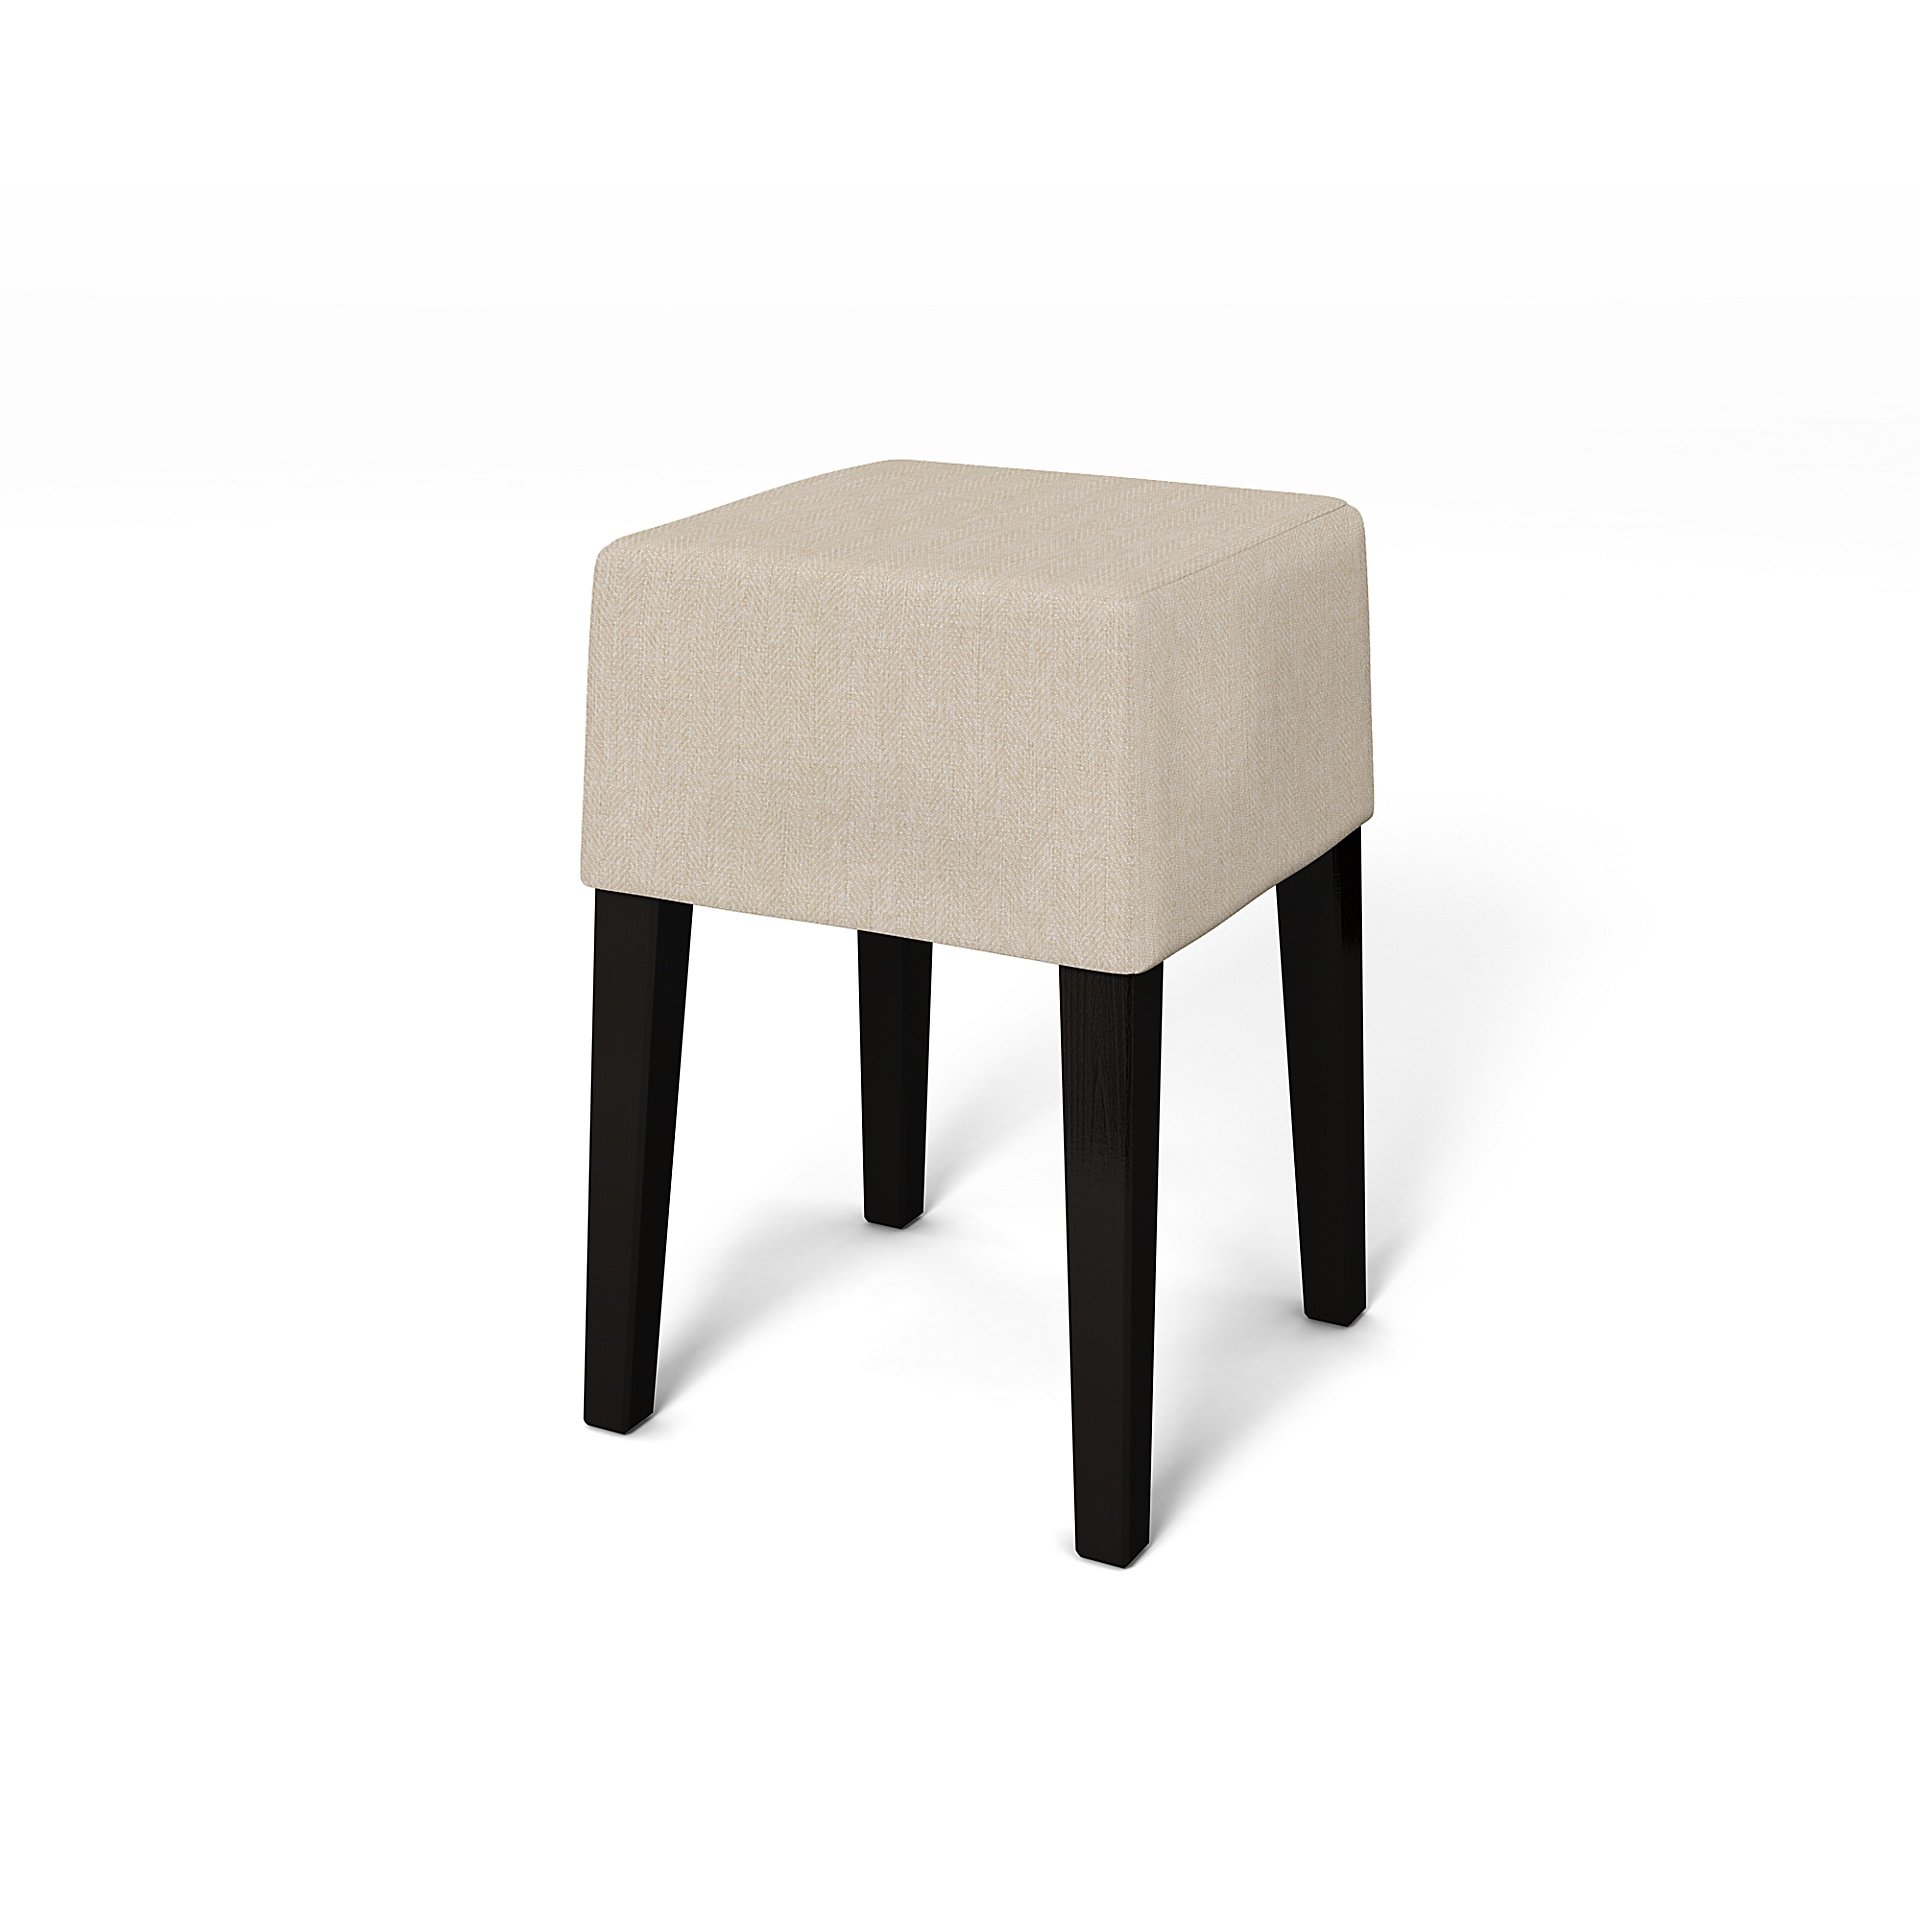 IKEA - Nils Stool Cover, Natural, Boucle & Texture - Bemz